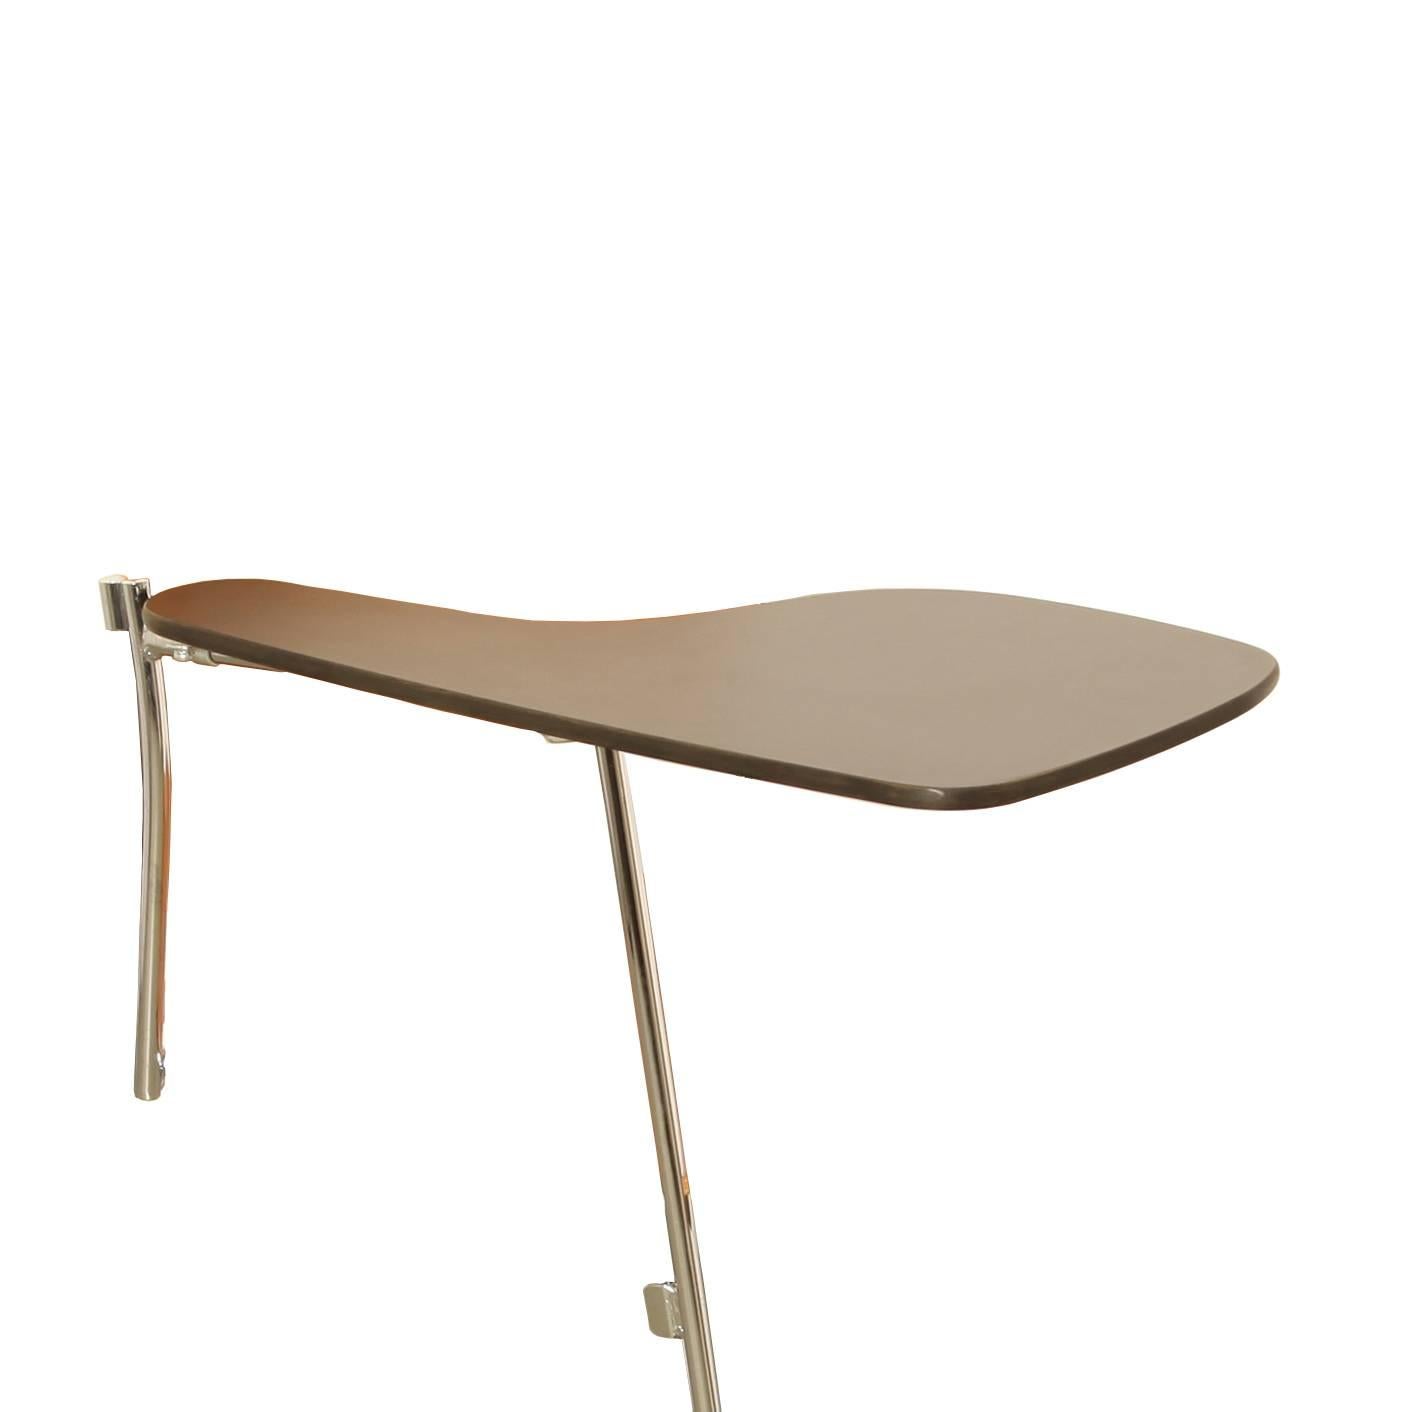 Name: 40/4 chair
Designer: David Rowland
Manufacturer: Howe, Denmark
Design year: 1964

Desk folds to rest at side of chair.